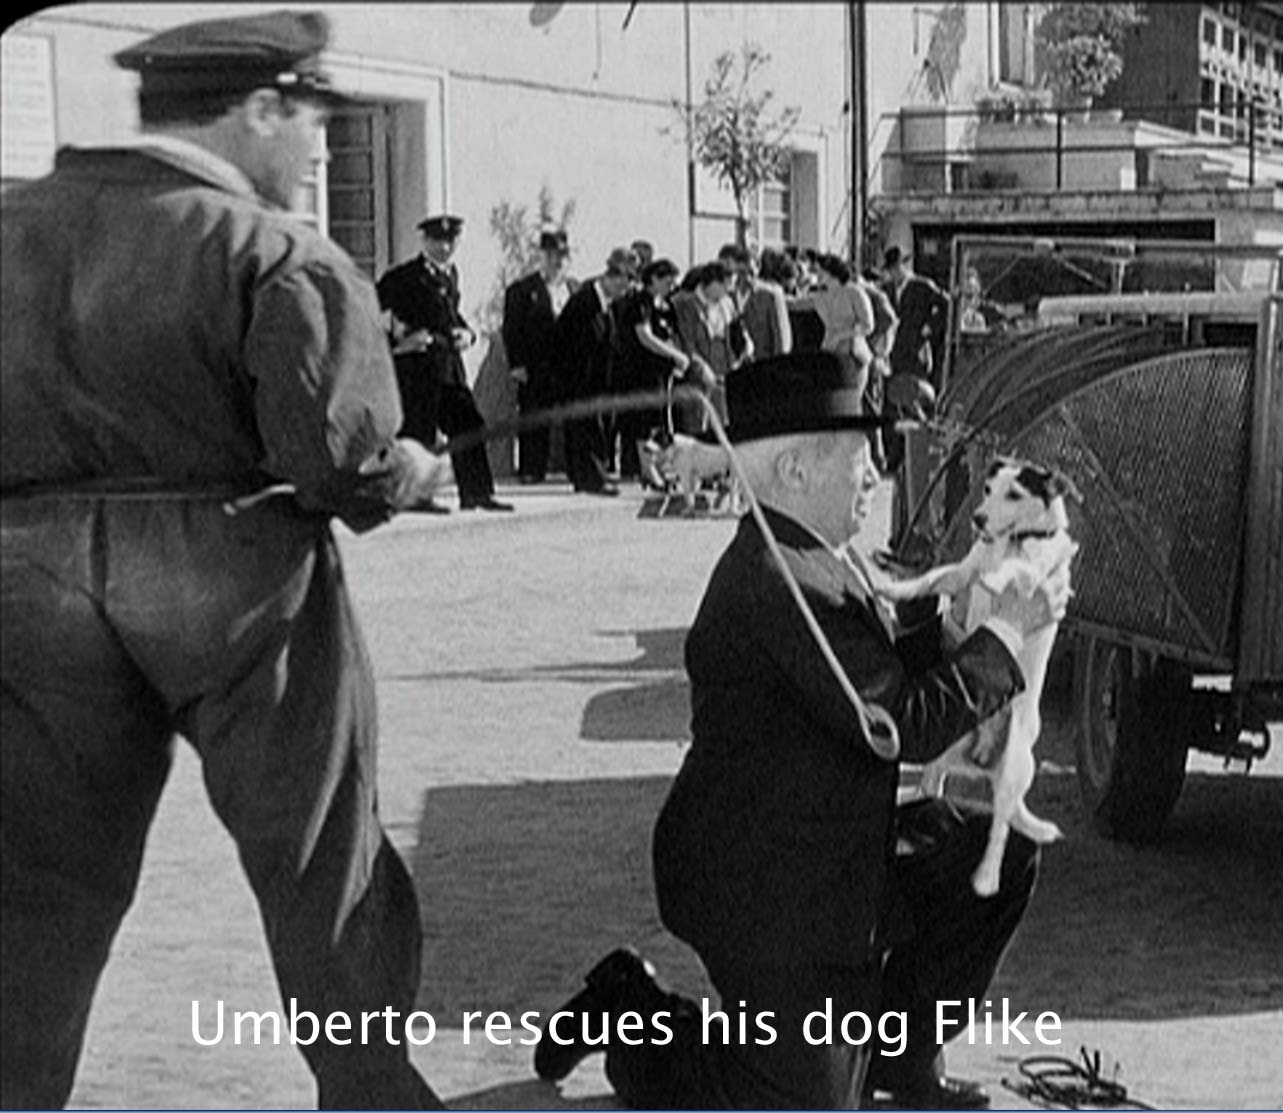 Umberto rescues his dog Flike